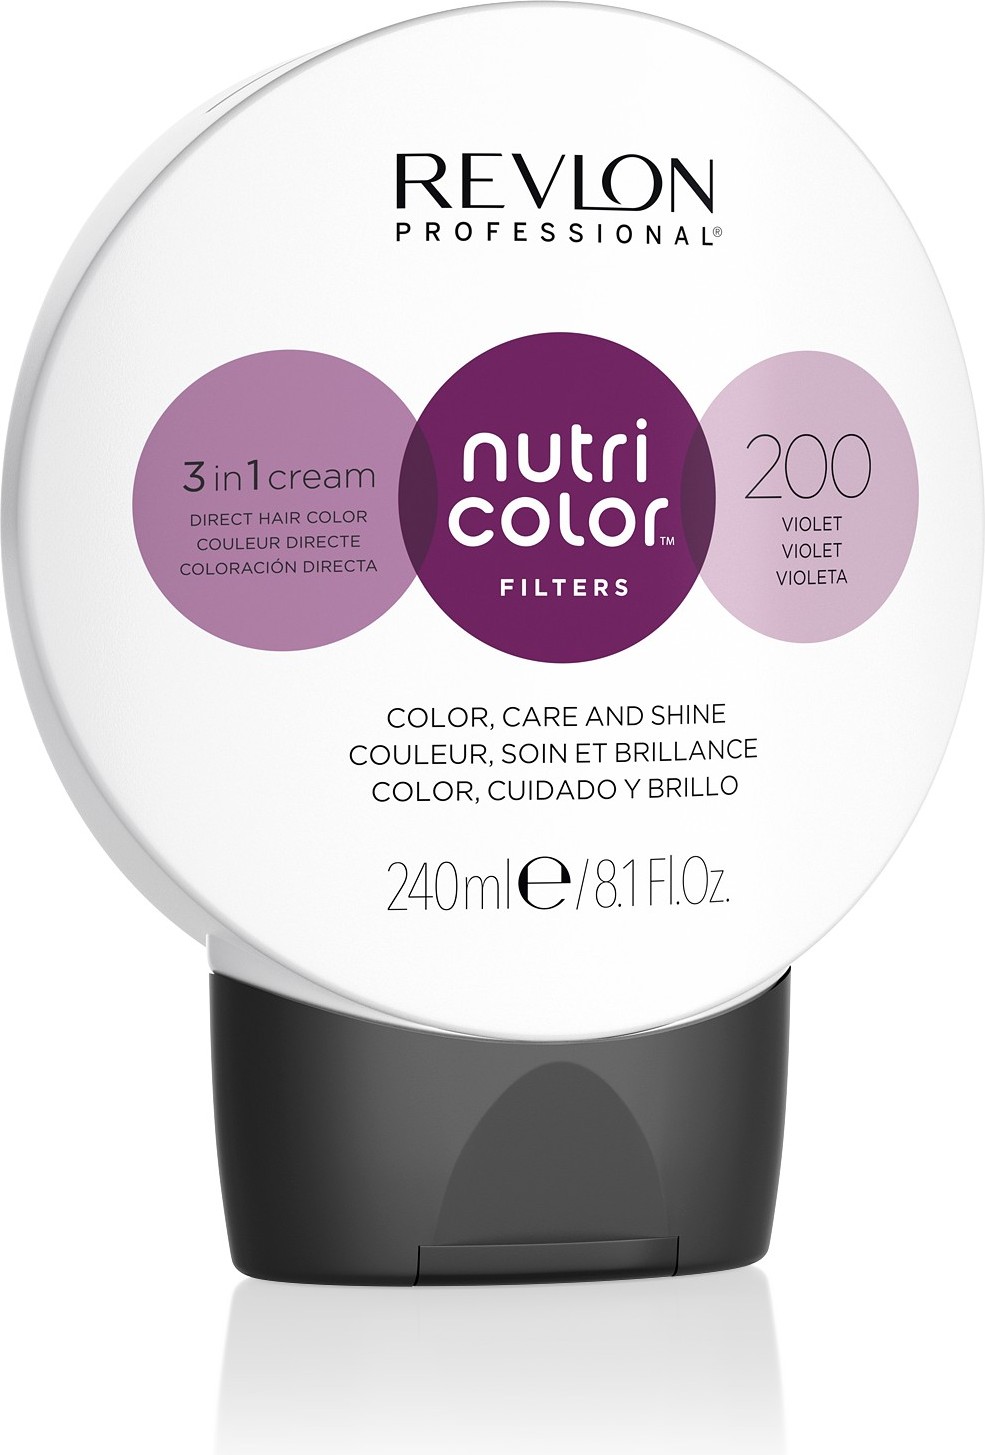  Revlon Professional Nutri Color Filters 200 Violet 240 ml 